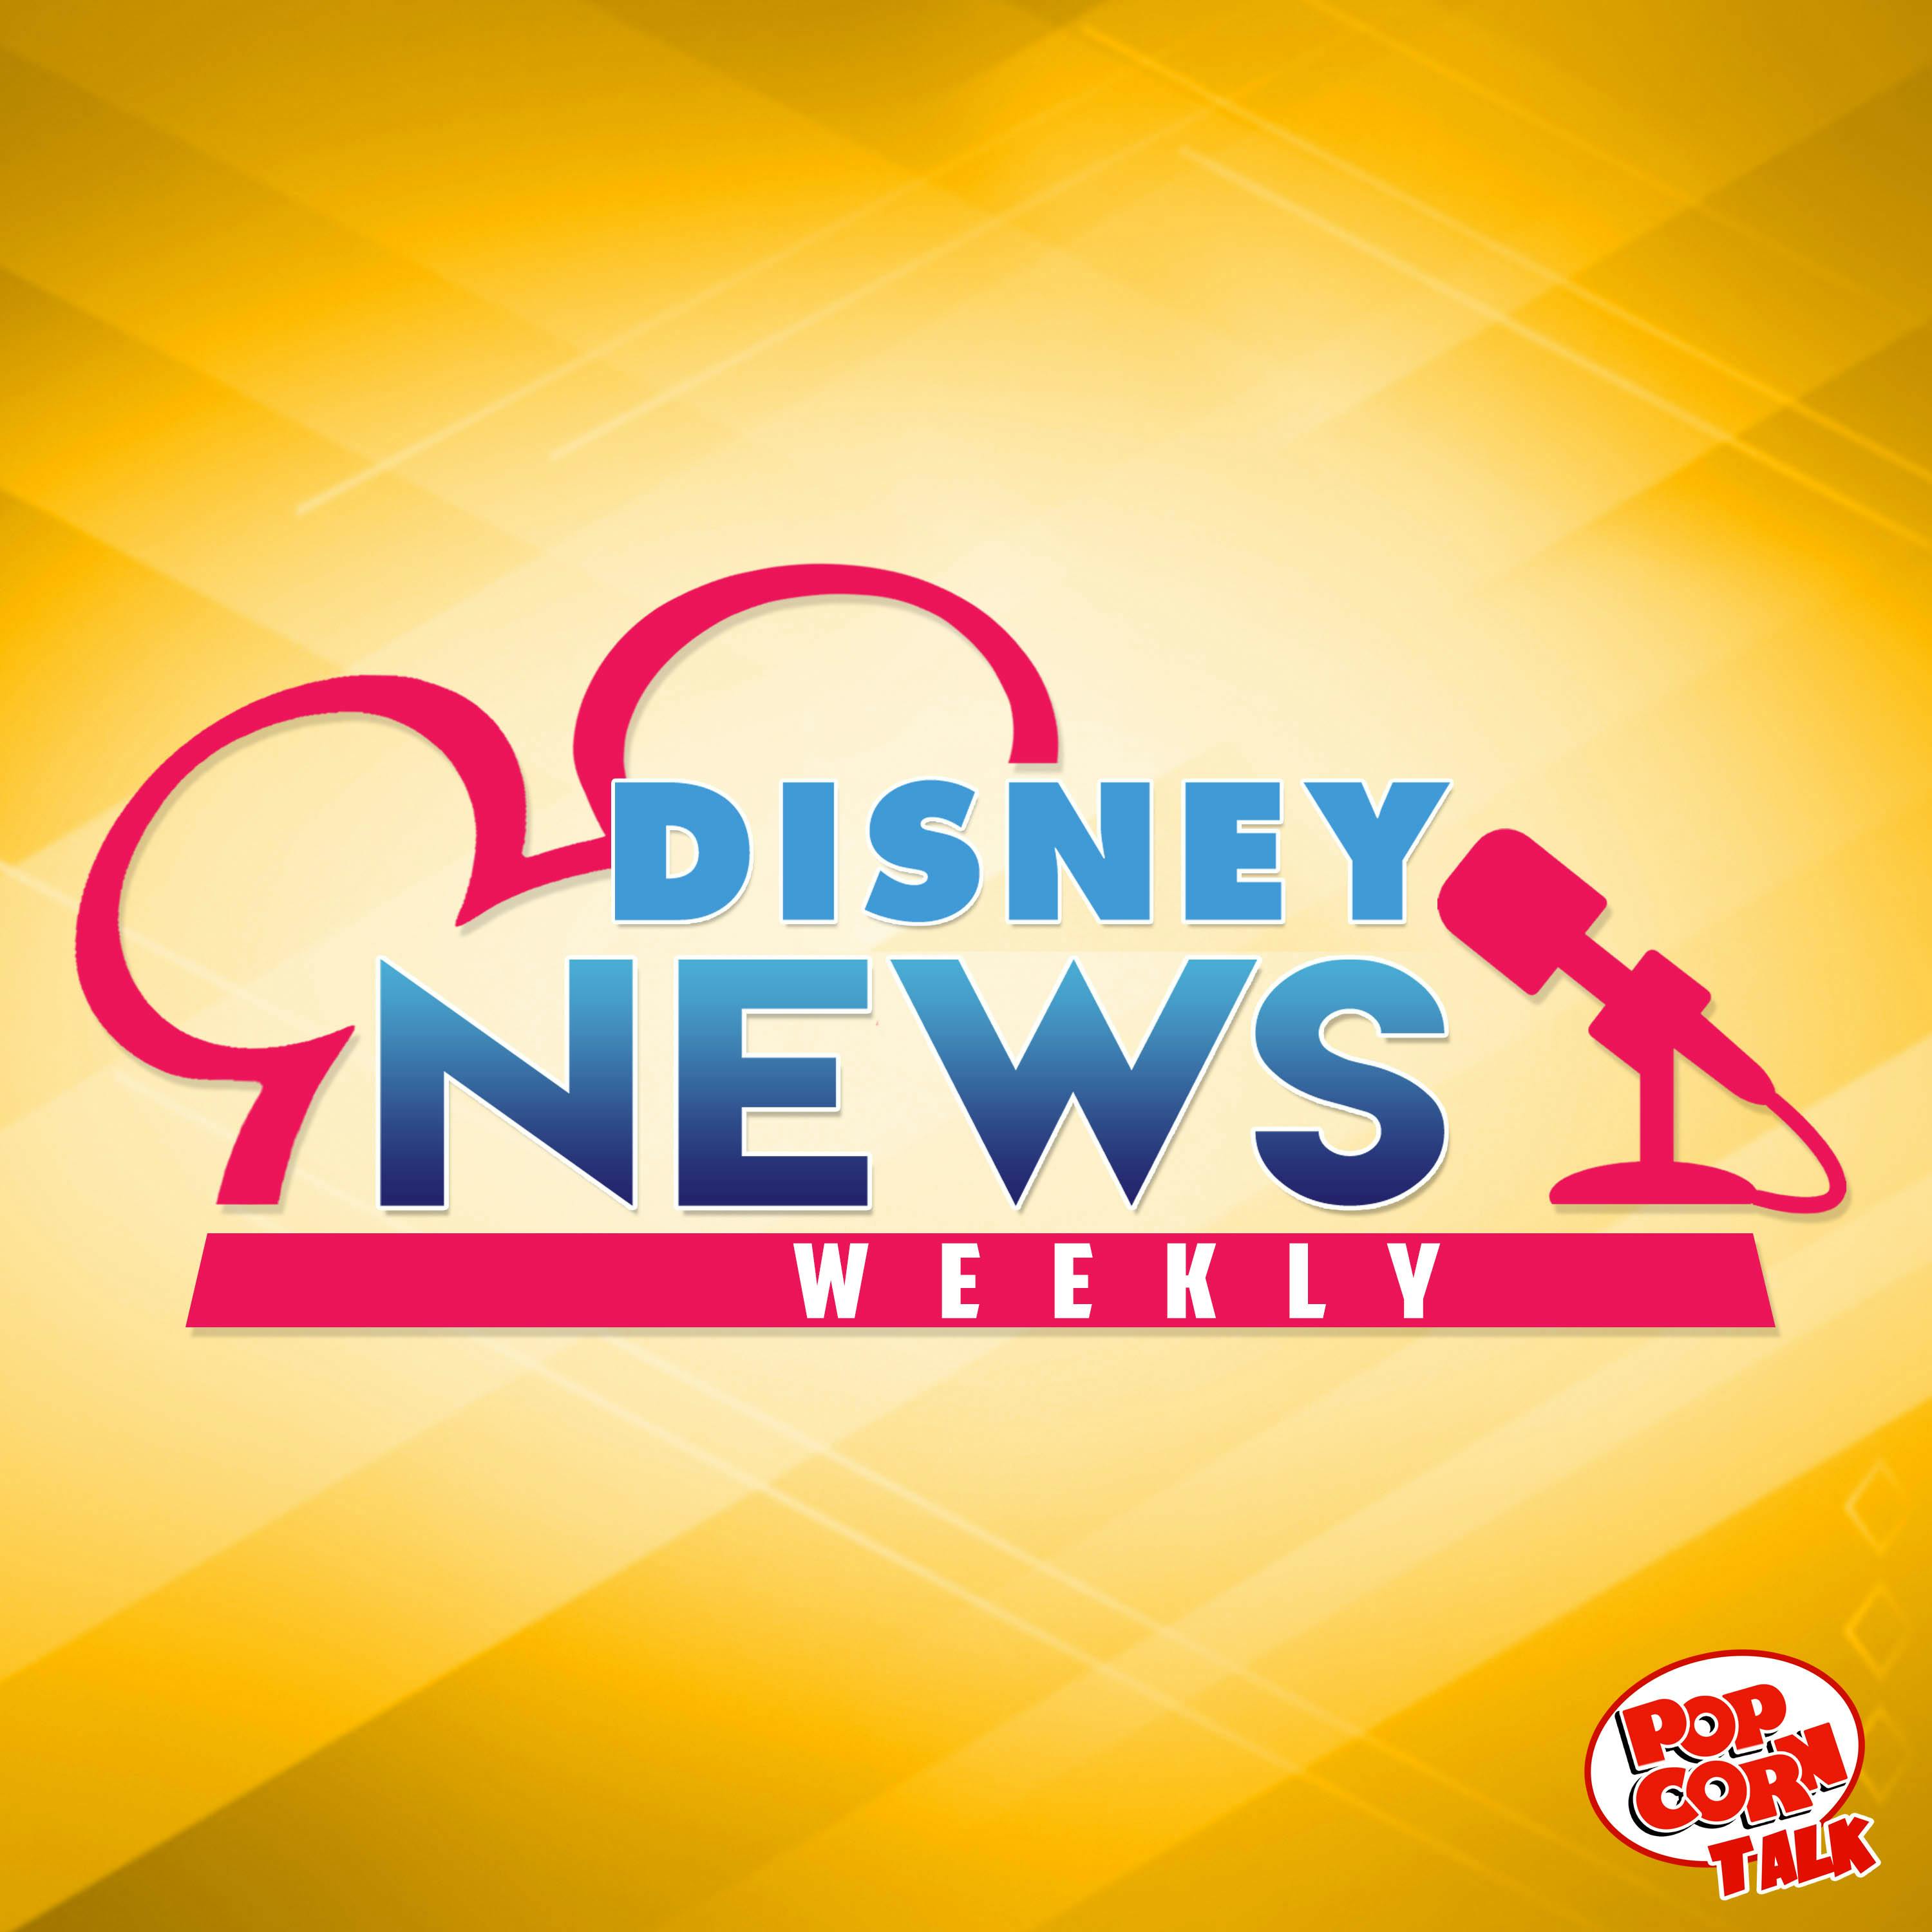 Edna Mode Meet & Greet at Disneyland, New Casting for Mulan & Maleficent 2 – Disney News Weekly 111